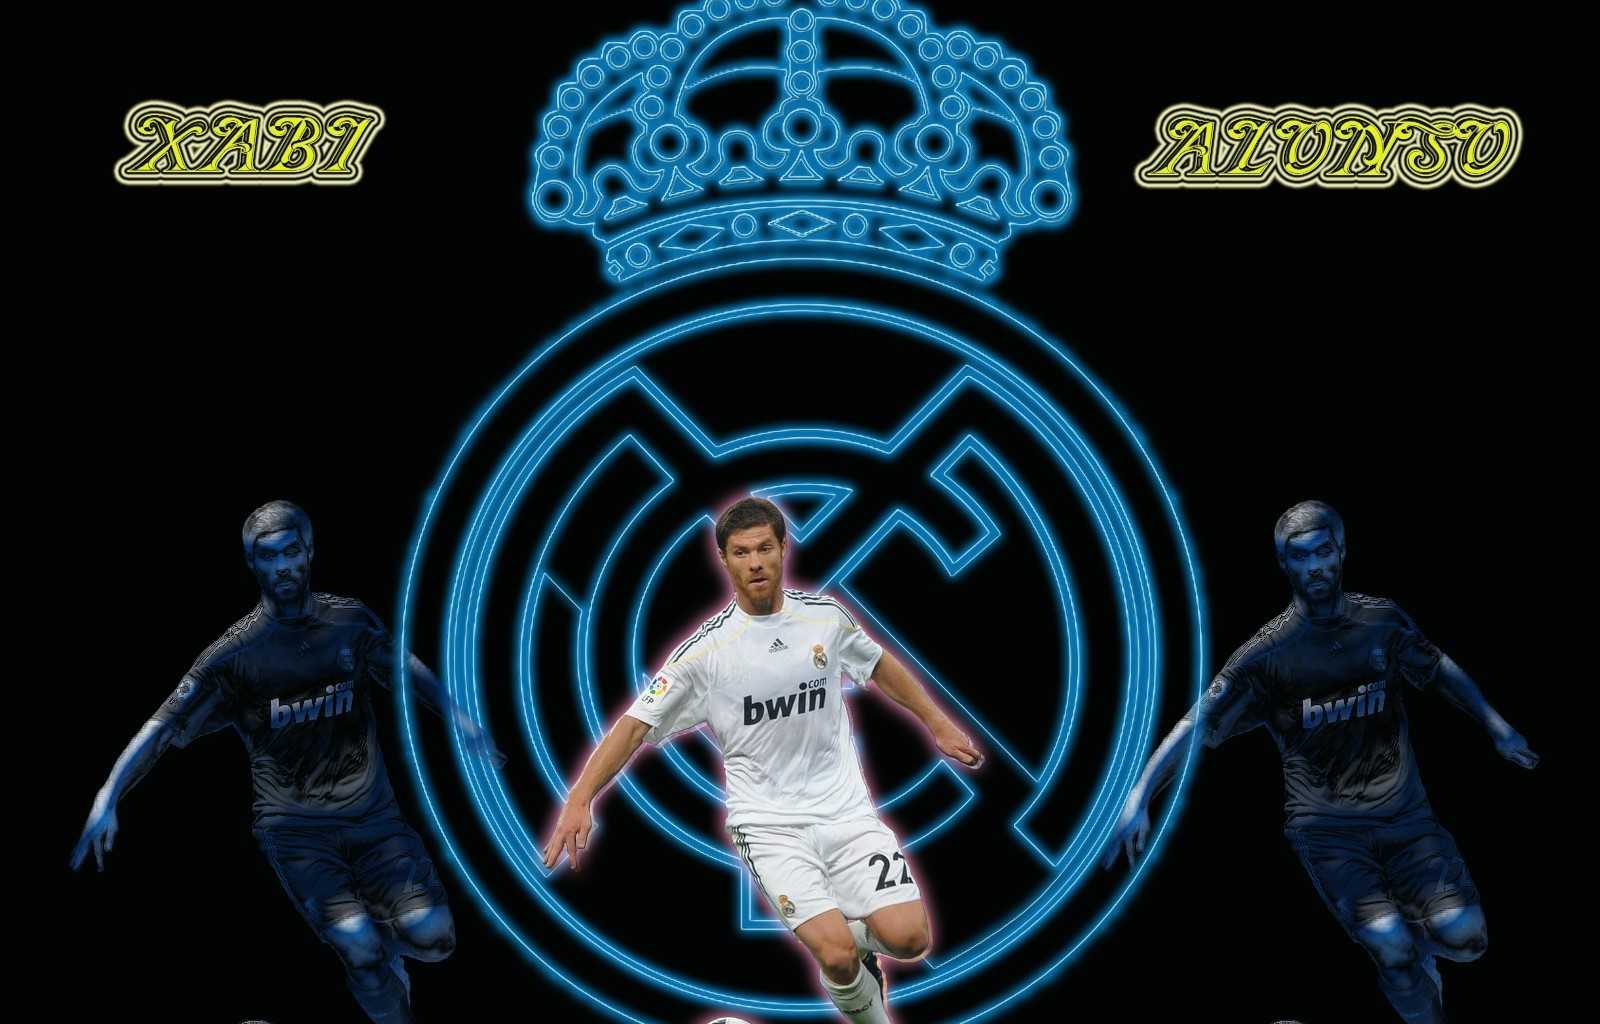 Xabi Alonso Real Madrid Phone Wallpaper 154709 Image